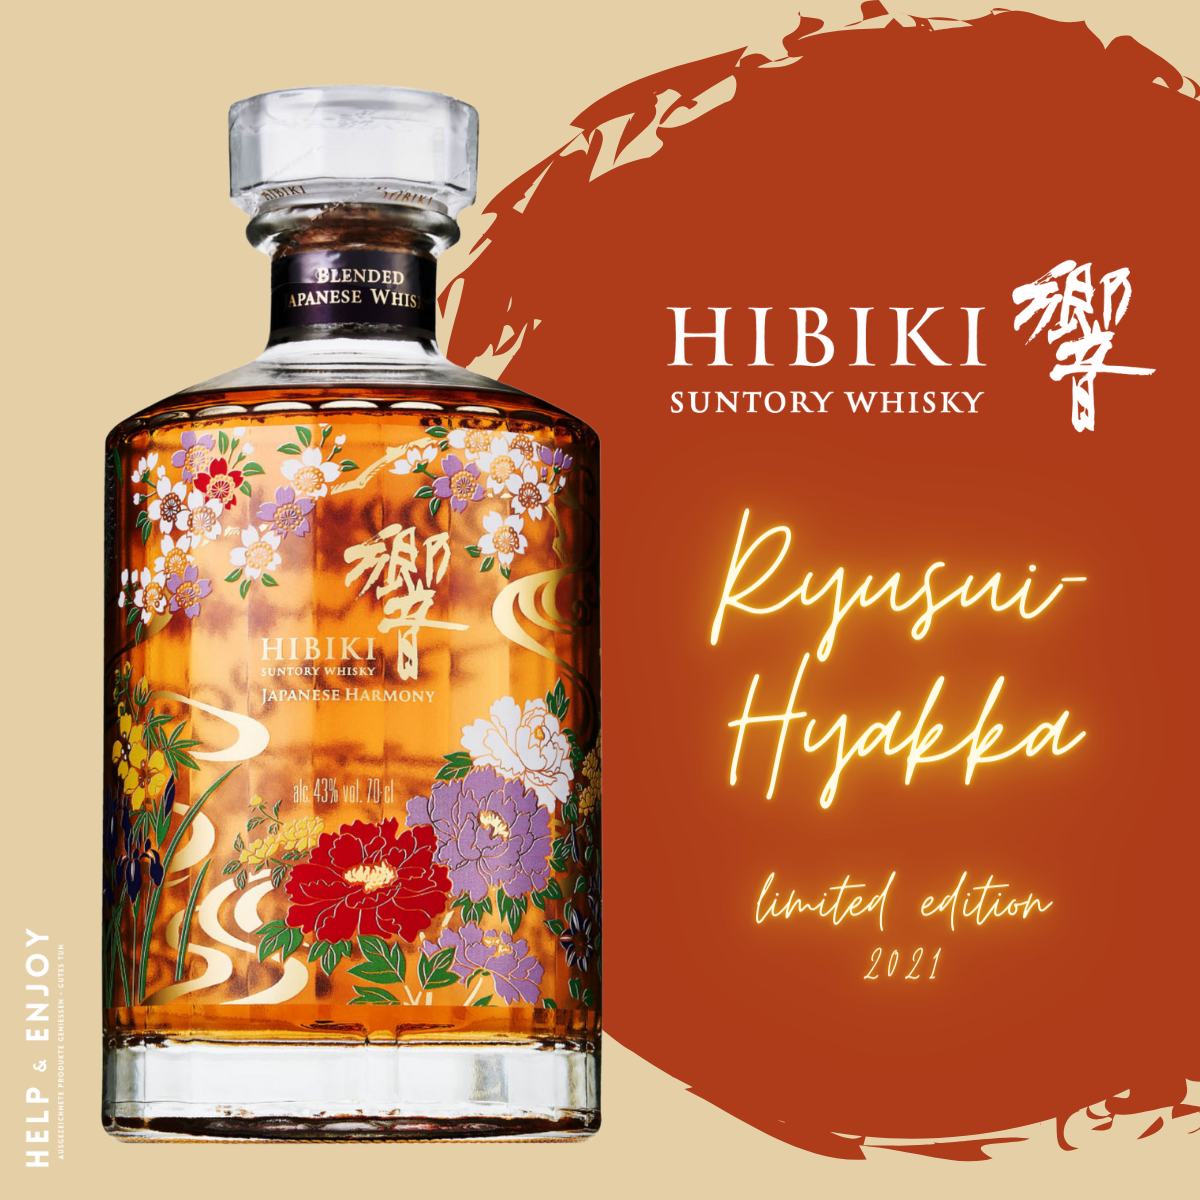 Hibiki Japanese Harmony limited Edition aus 2021 - Ryusui-Hyakka